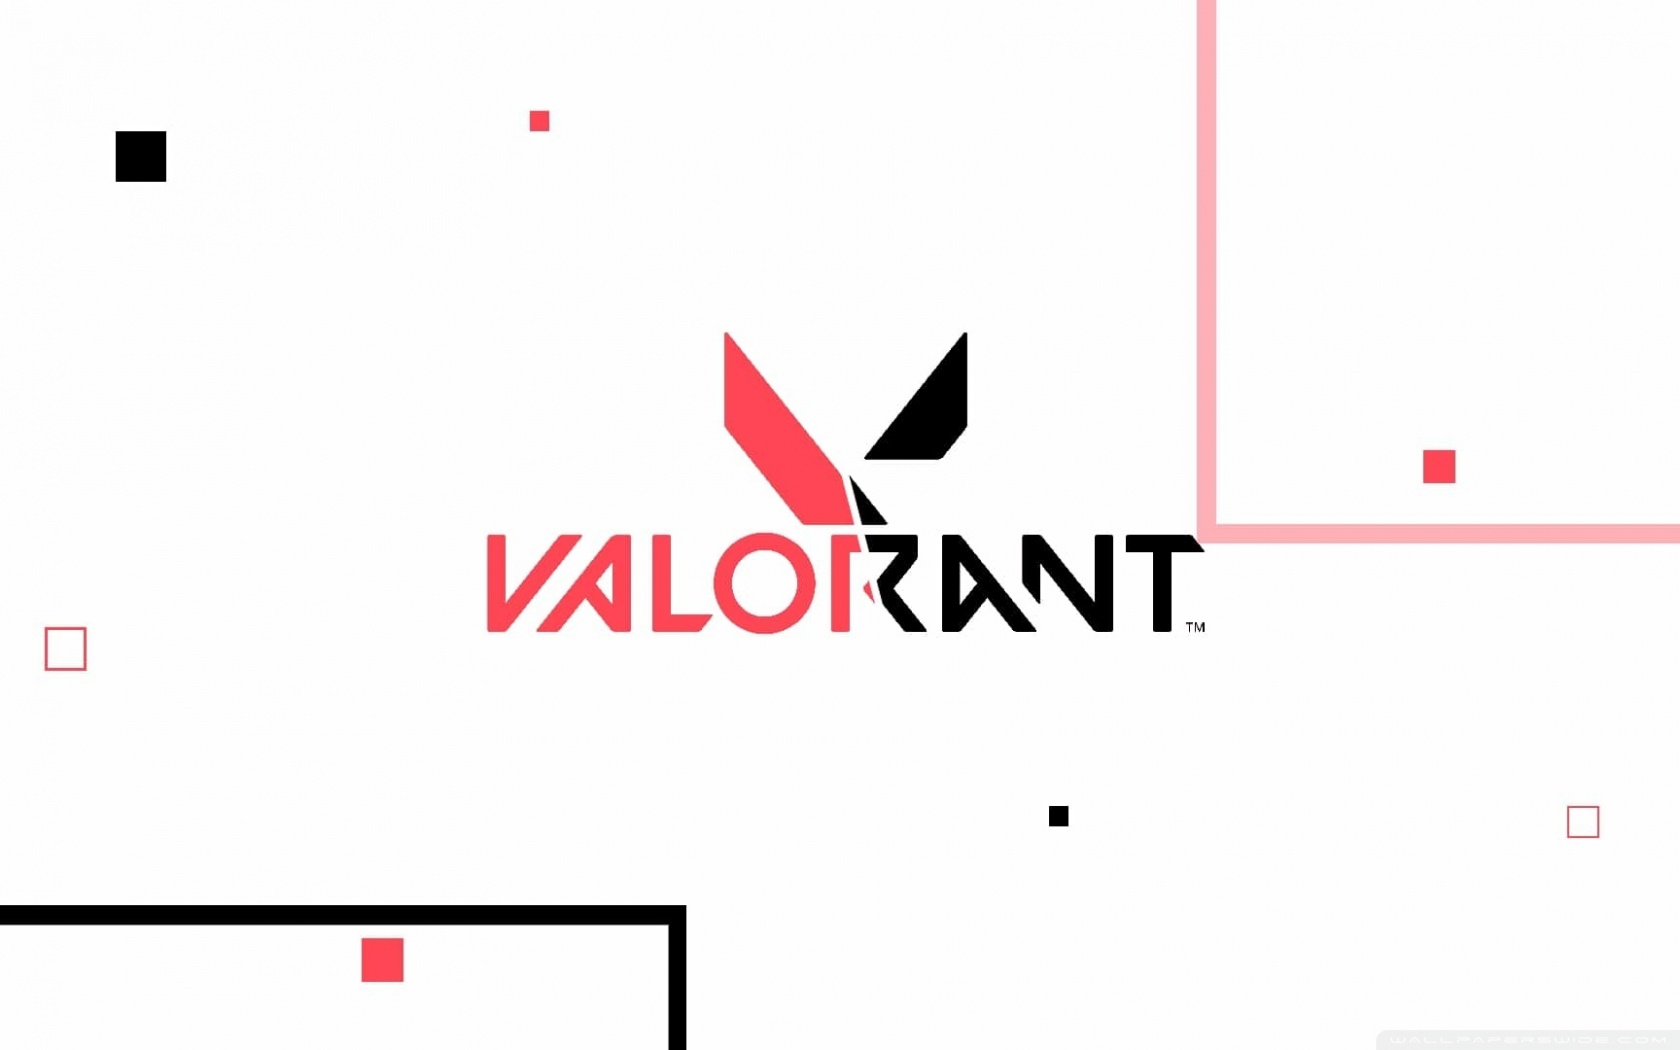 Windows 10 X Valorant Logo Wallpapers